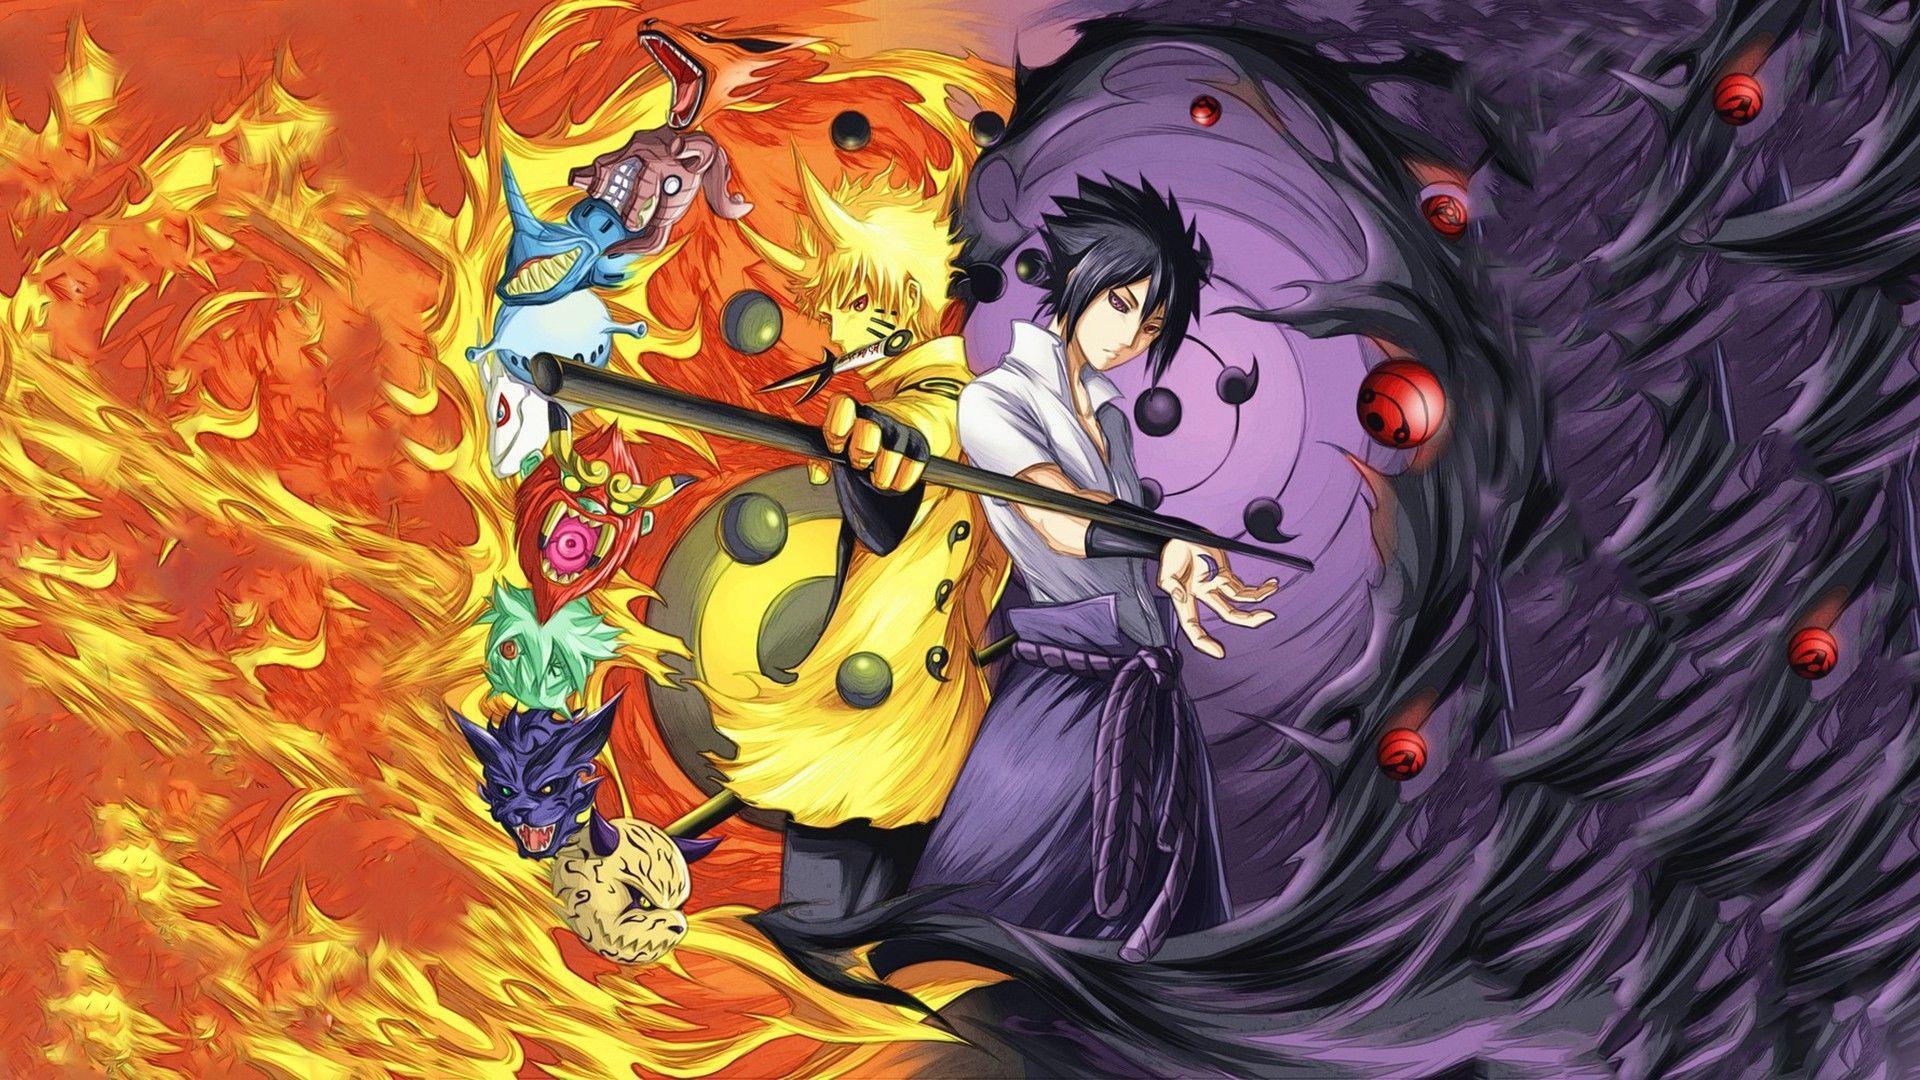 83 Gambar Naruto Rikudo Dan Sasuke Rinnegan Kekinian